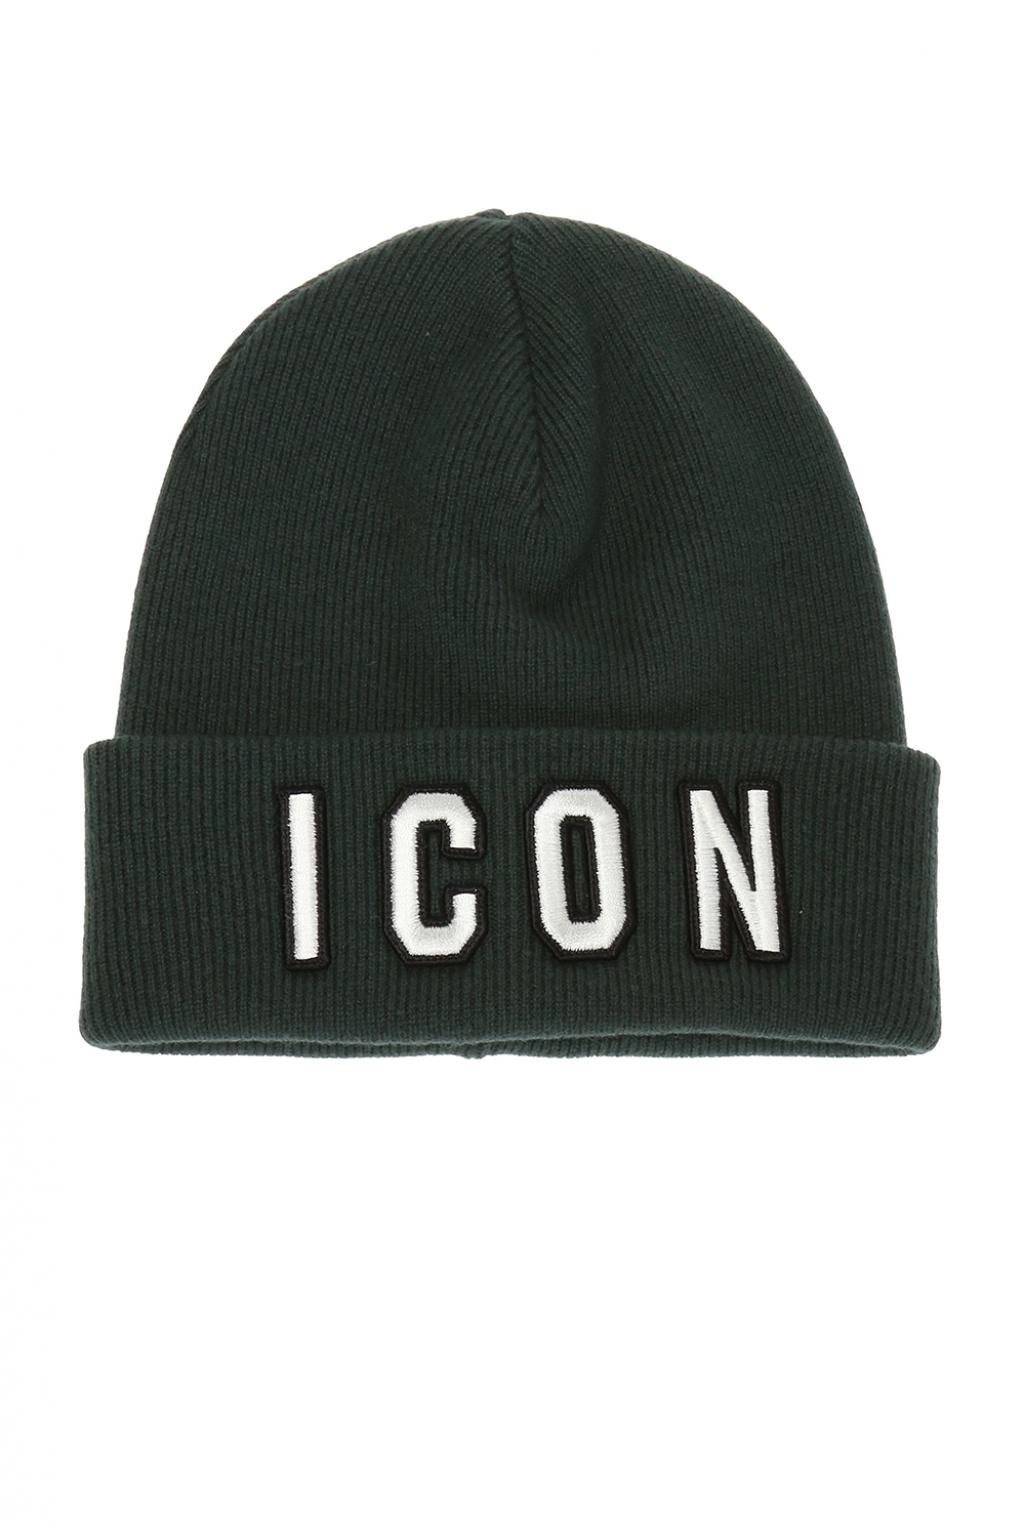 Dsquared2 'Icon' hat